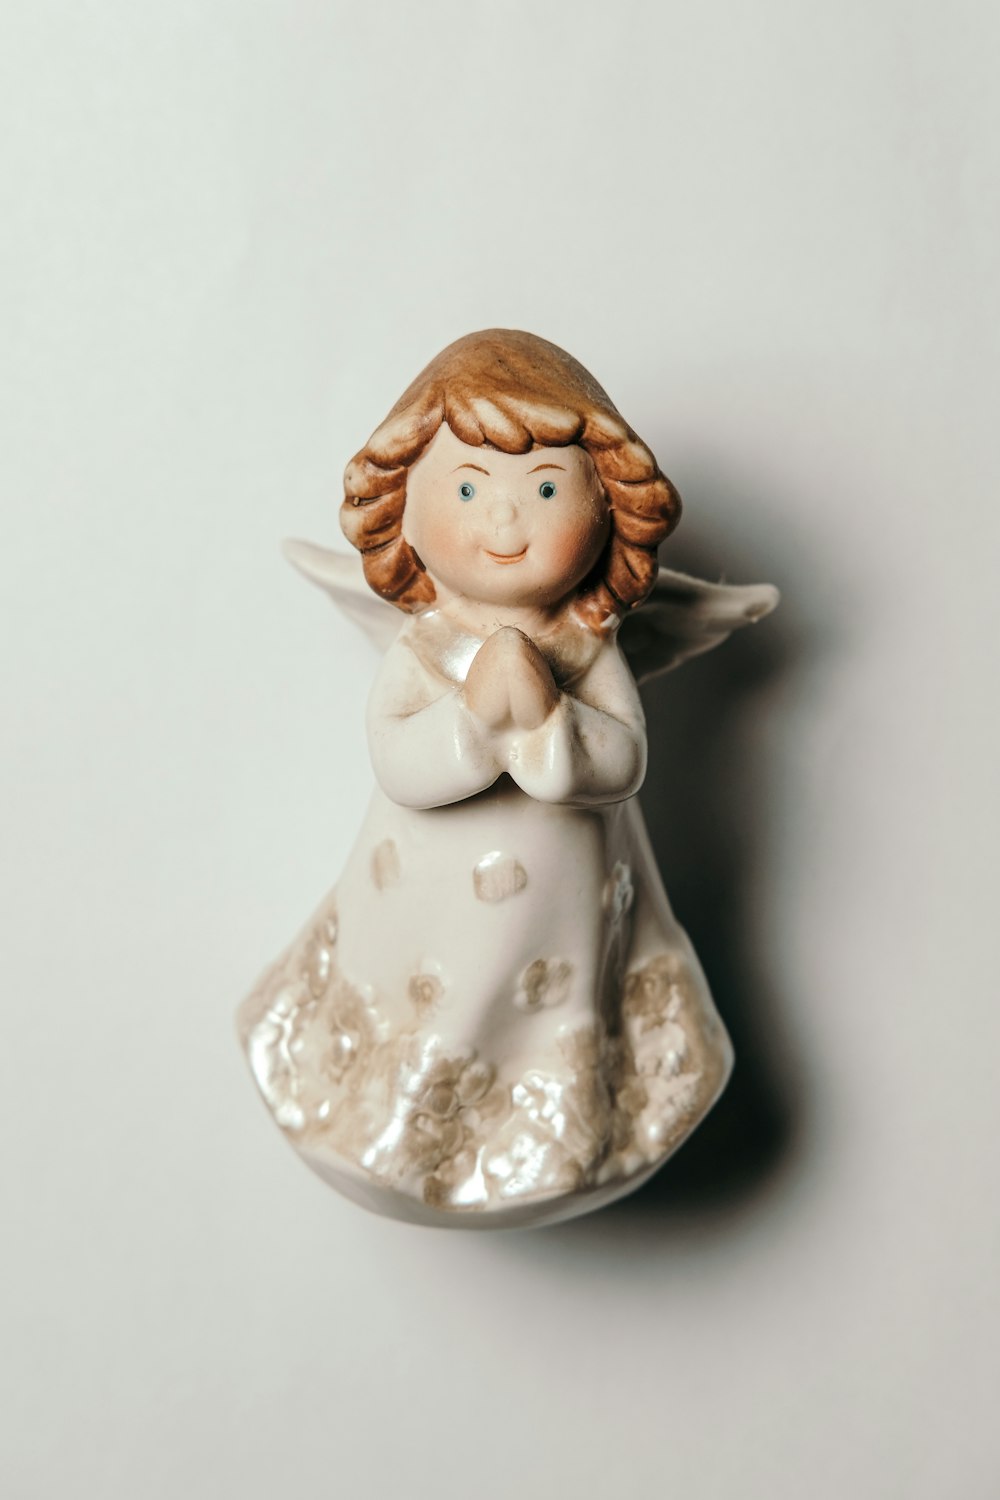 angel ceramic figurine on white surface